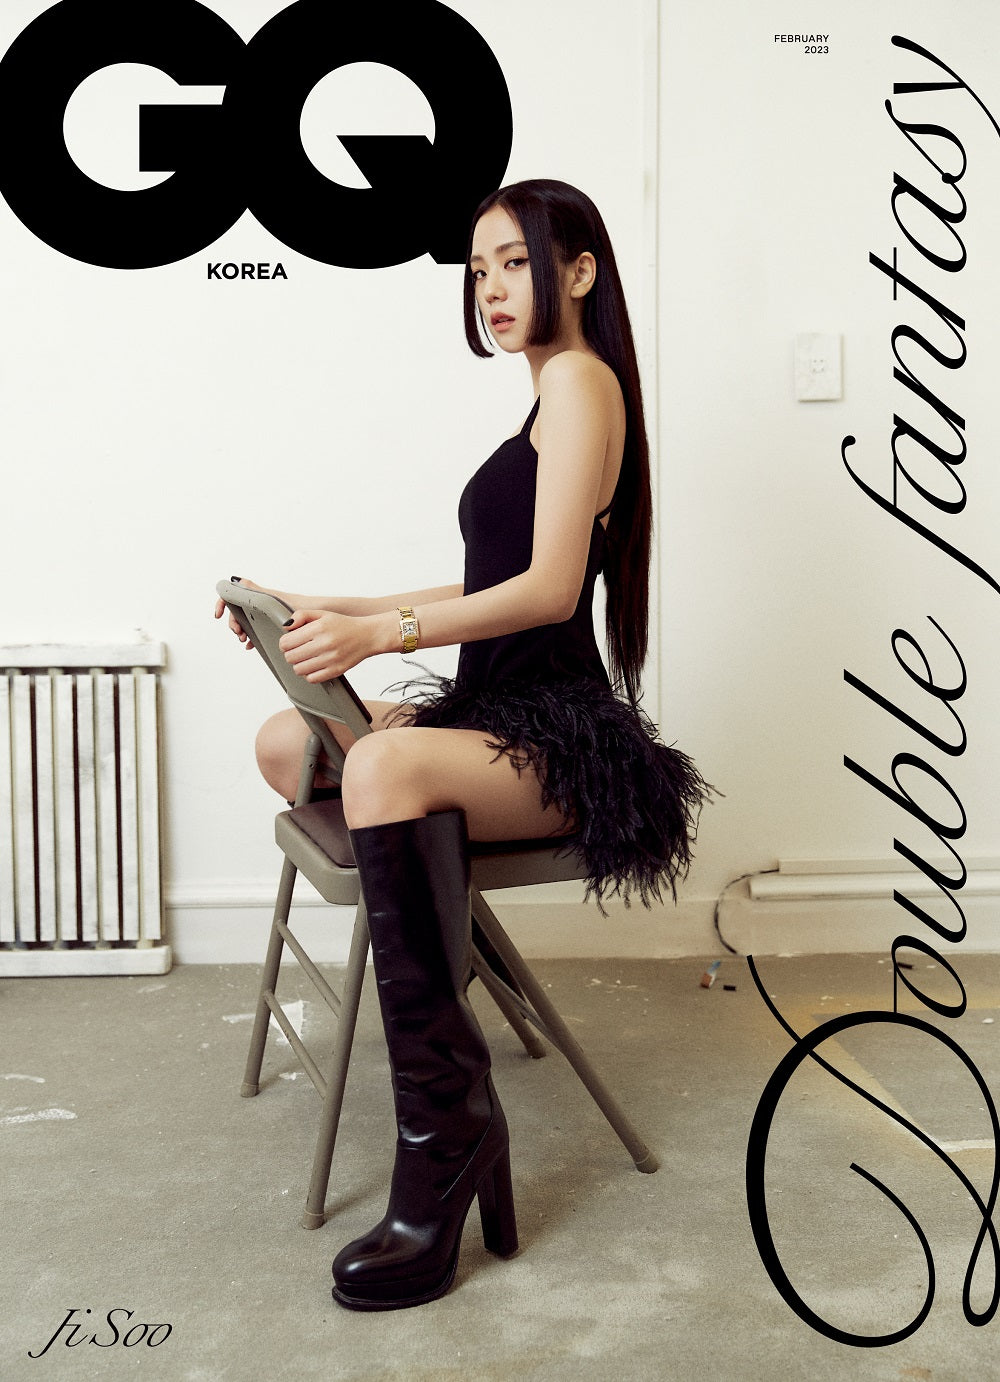 GQ | 2023 FEB. | BLACKPINK JISOO COVER